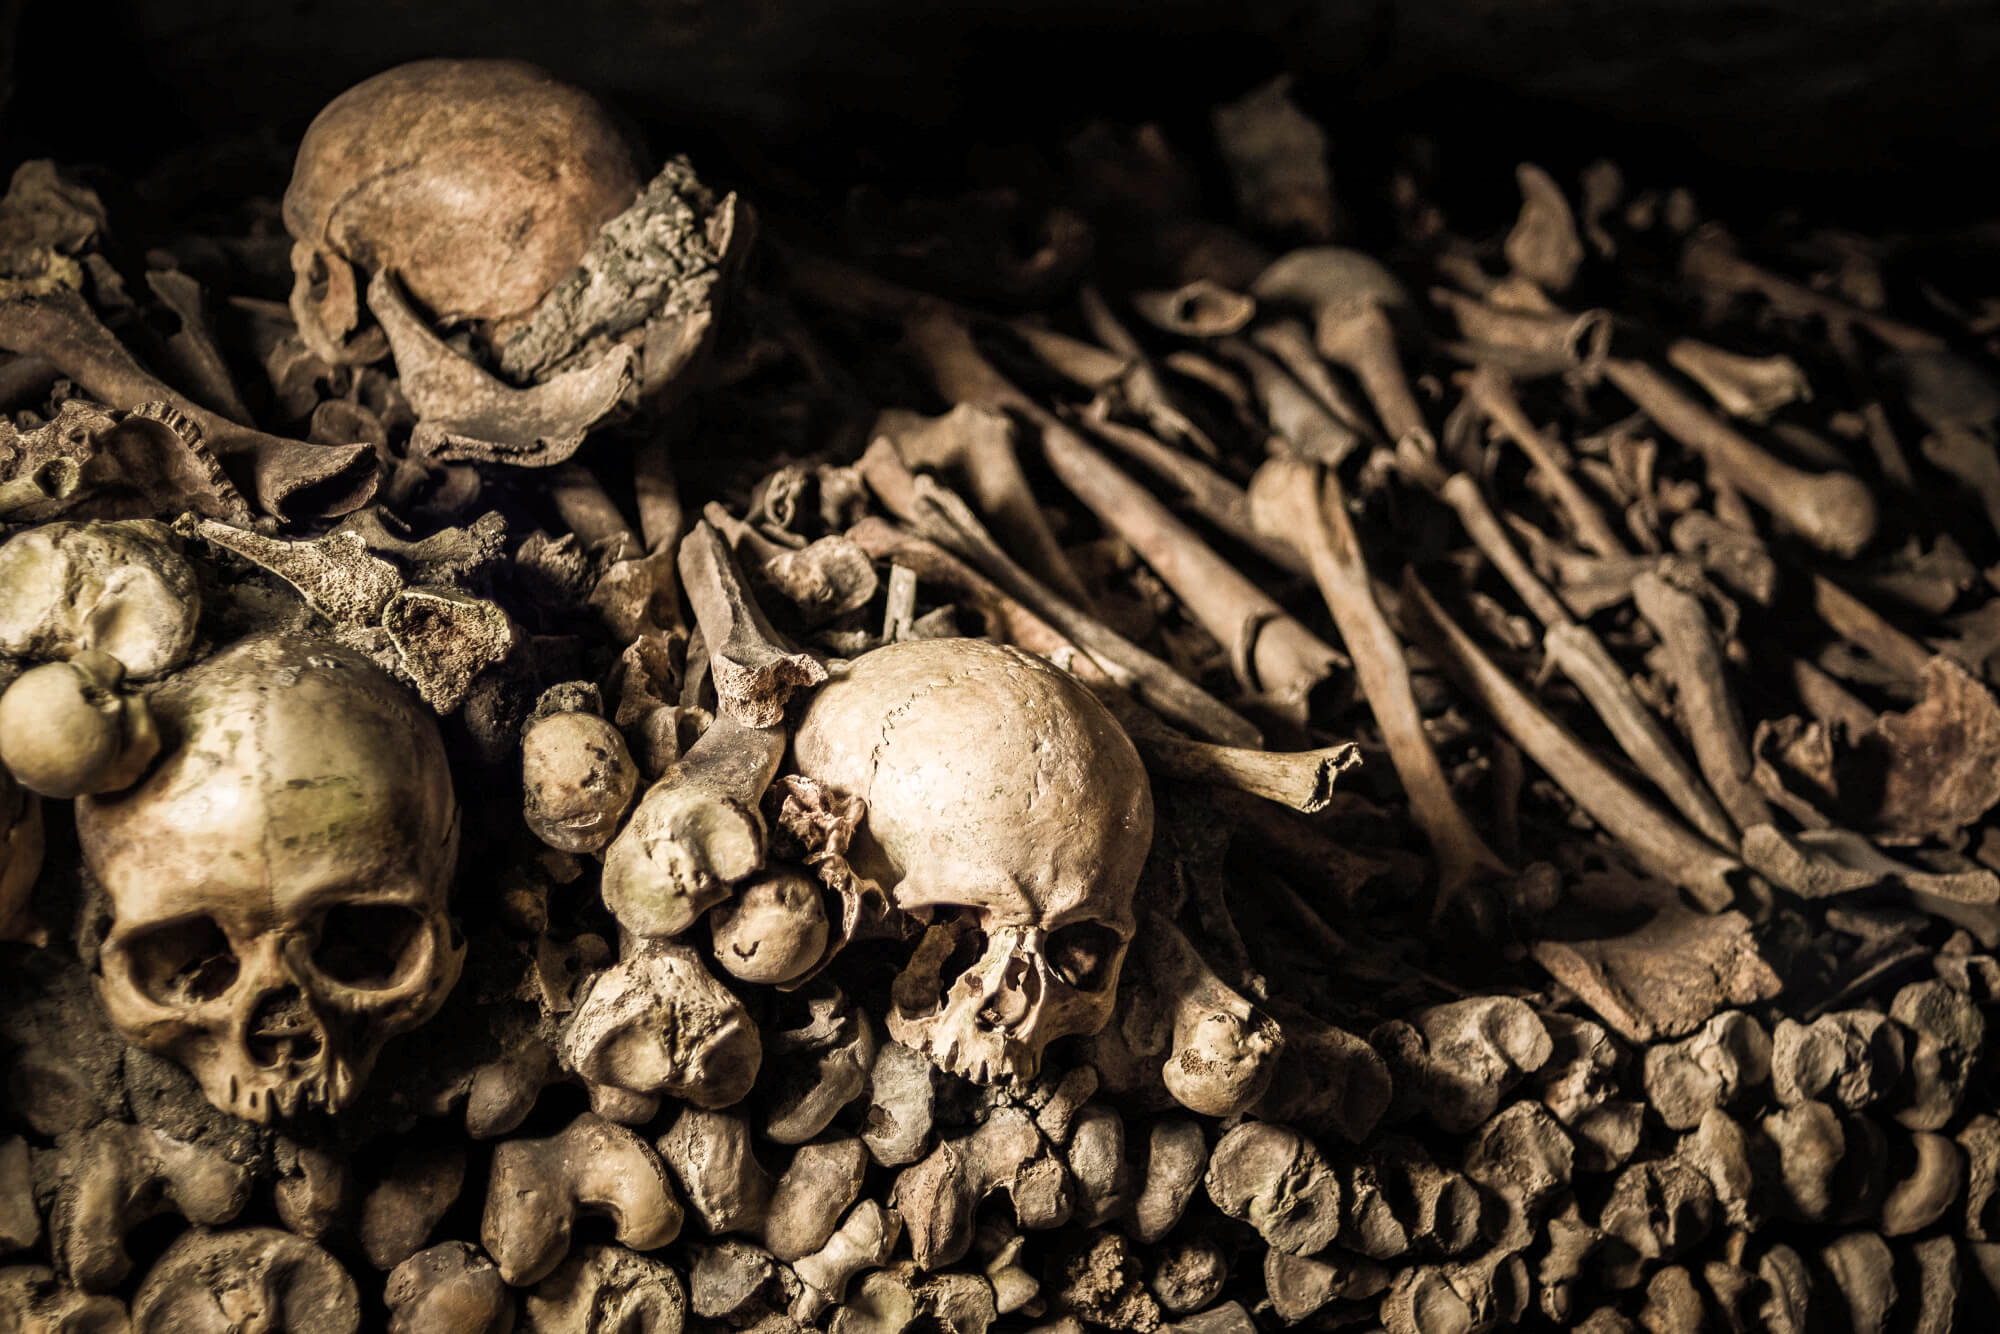 Skulls in the catacombs